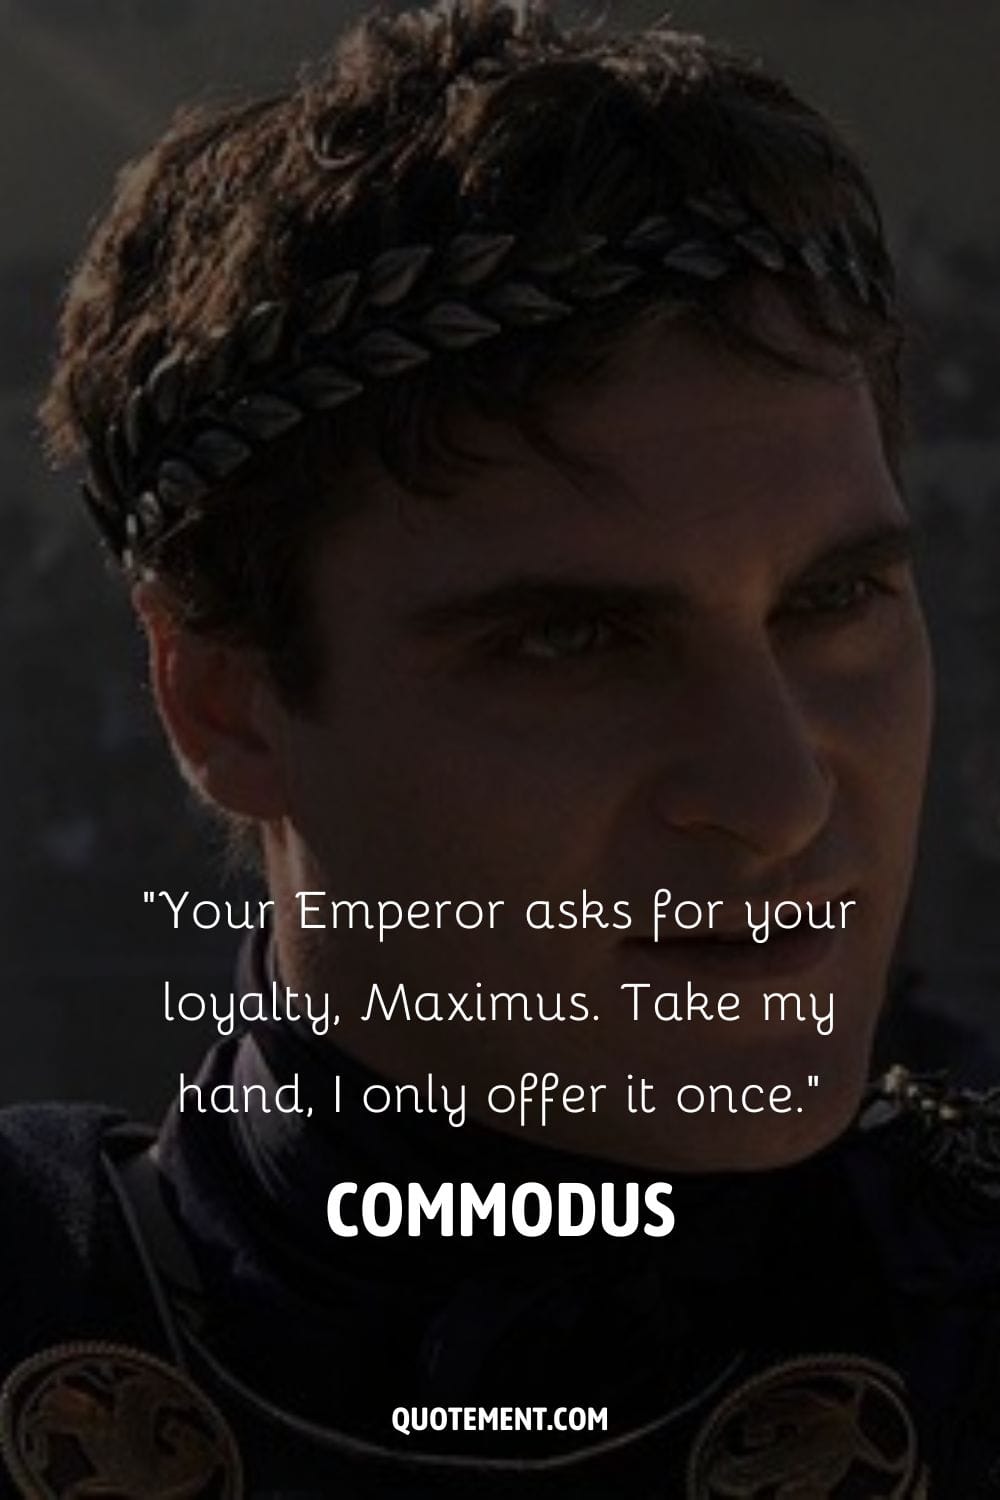 Commodus, ruthless Roman emperor in Gladiator film